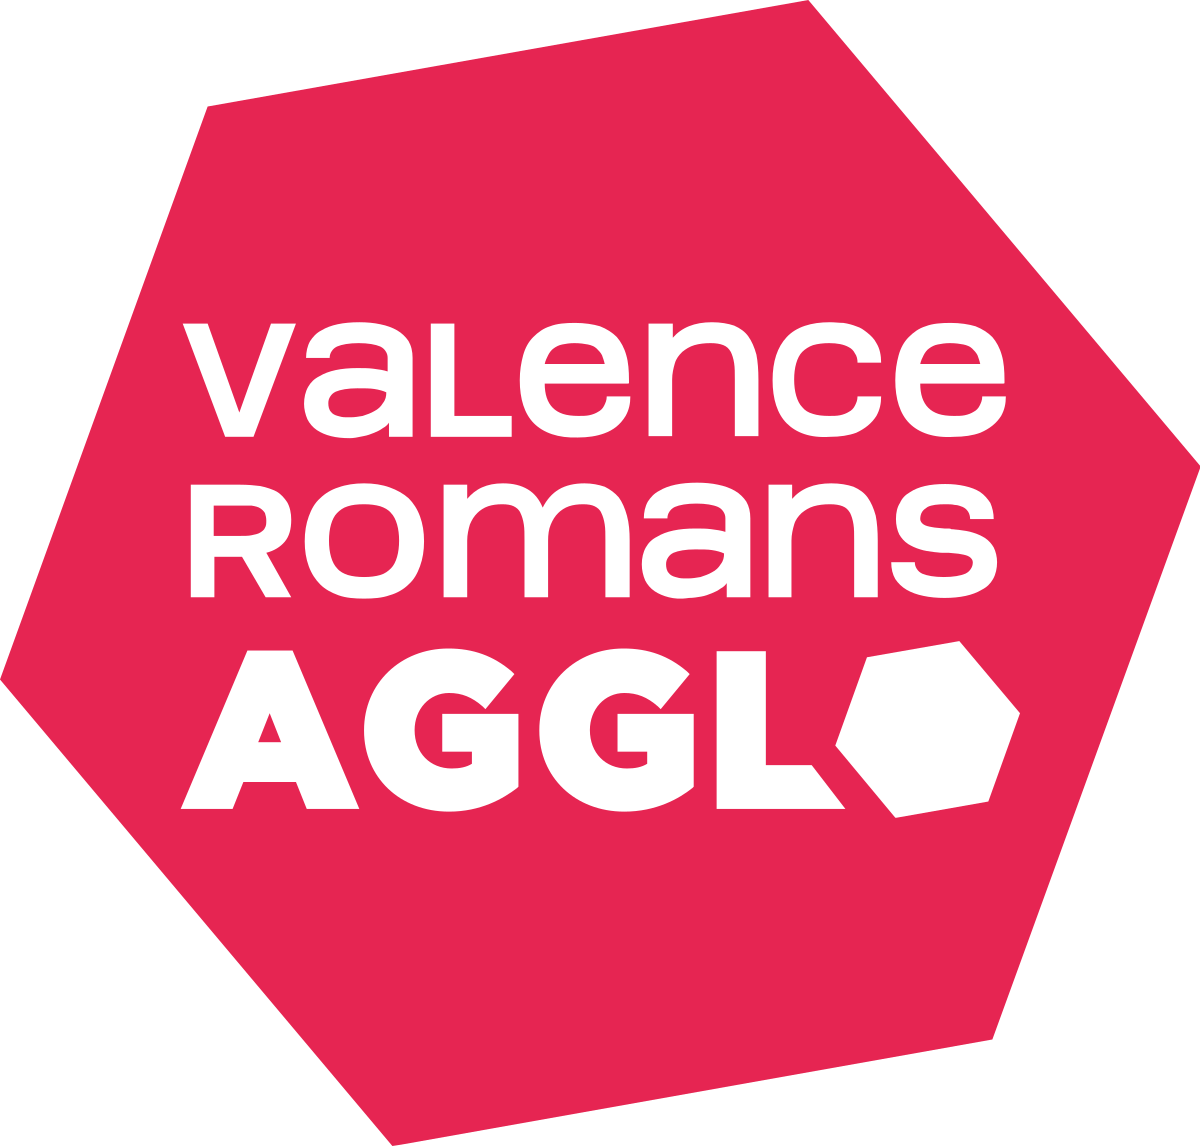 1200px-logo-valence-romans-agglosvg-1-wg0ojw9g.png